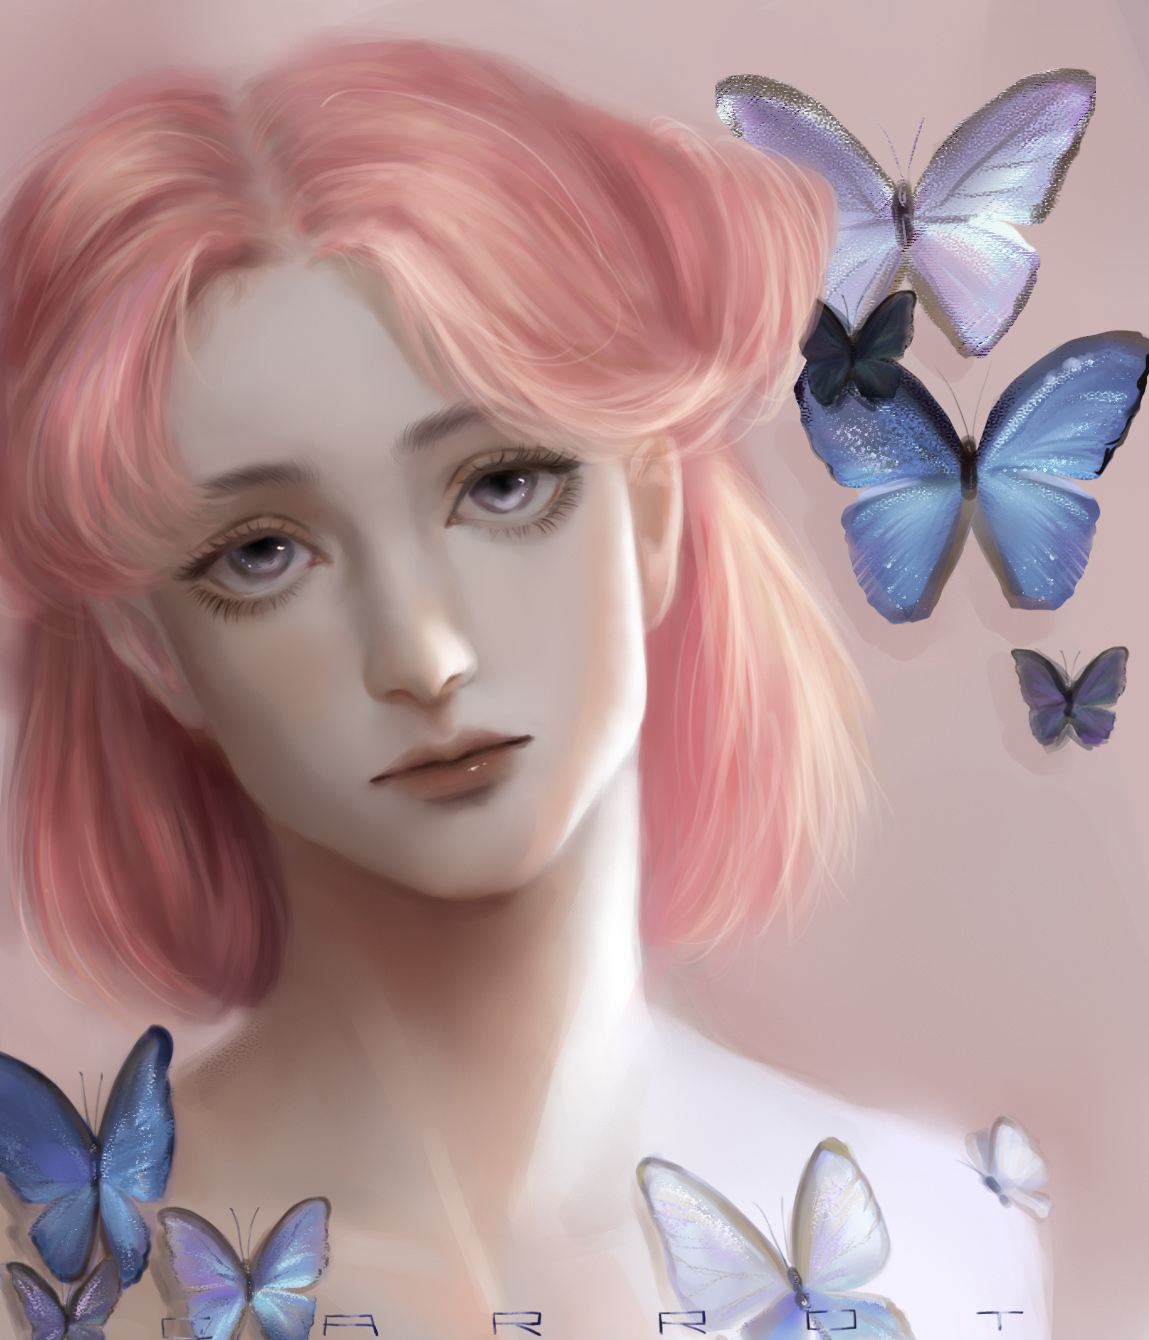 Fantasy Girl Pink Hair Butterfly Looking At Viewer Digital Art 1149x1340